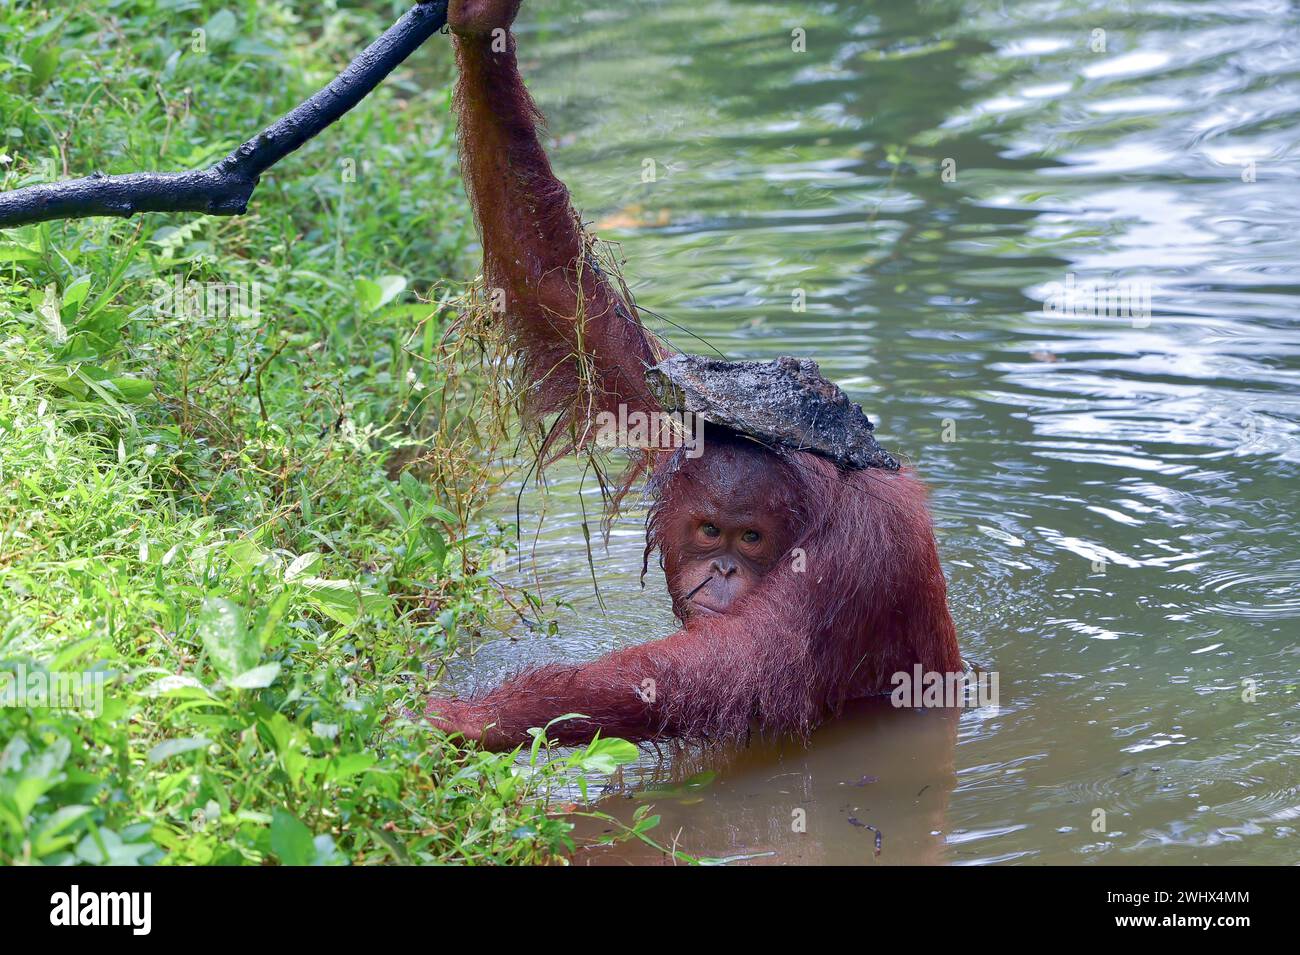 Orangutan swimming in the river Stock Photo